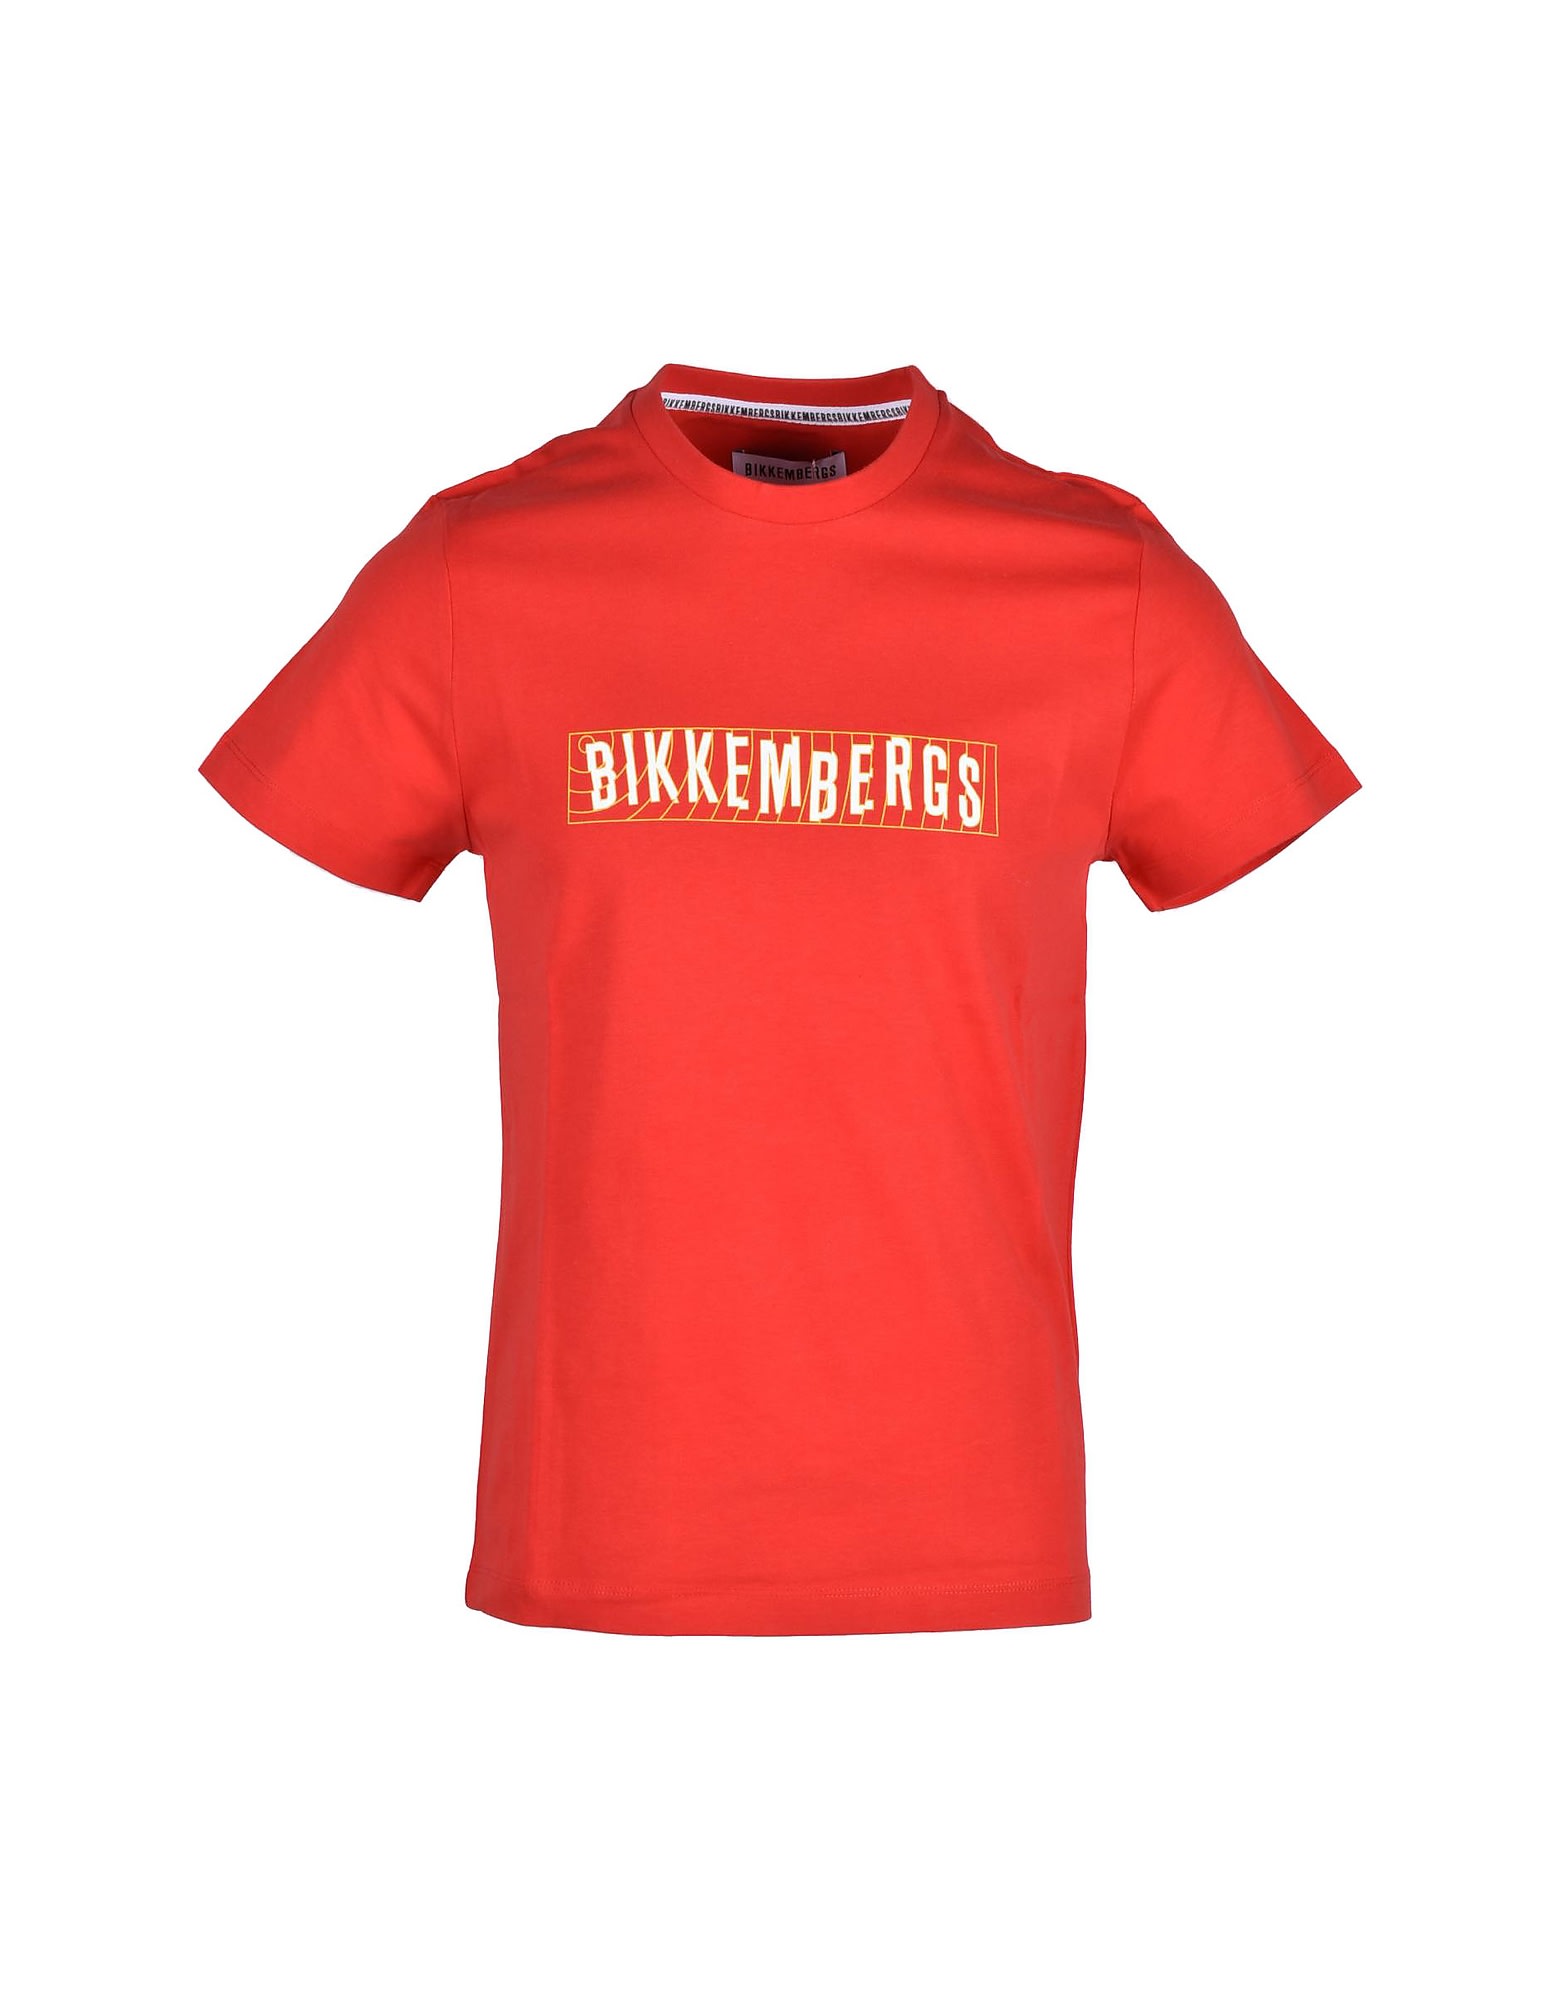 Bikkembergs Mens Red T-shirt